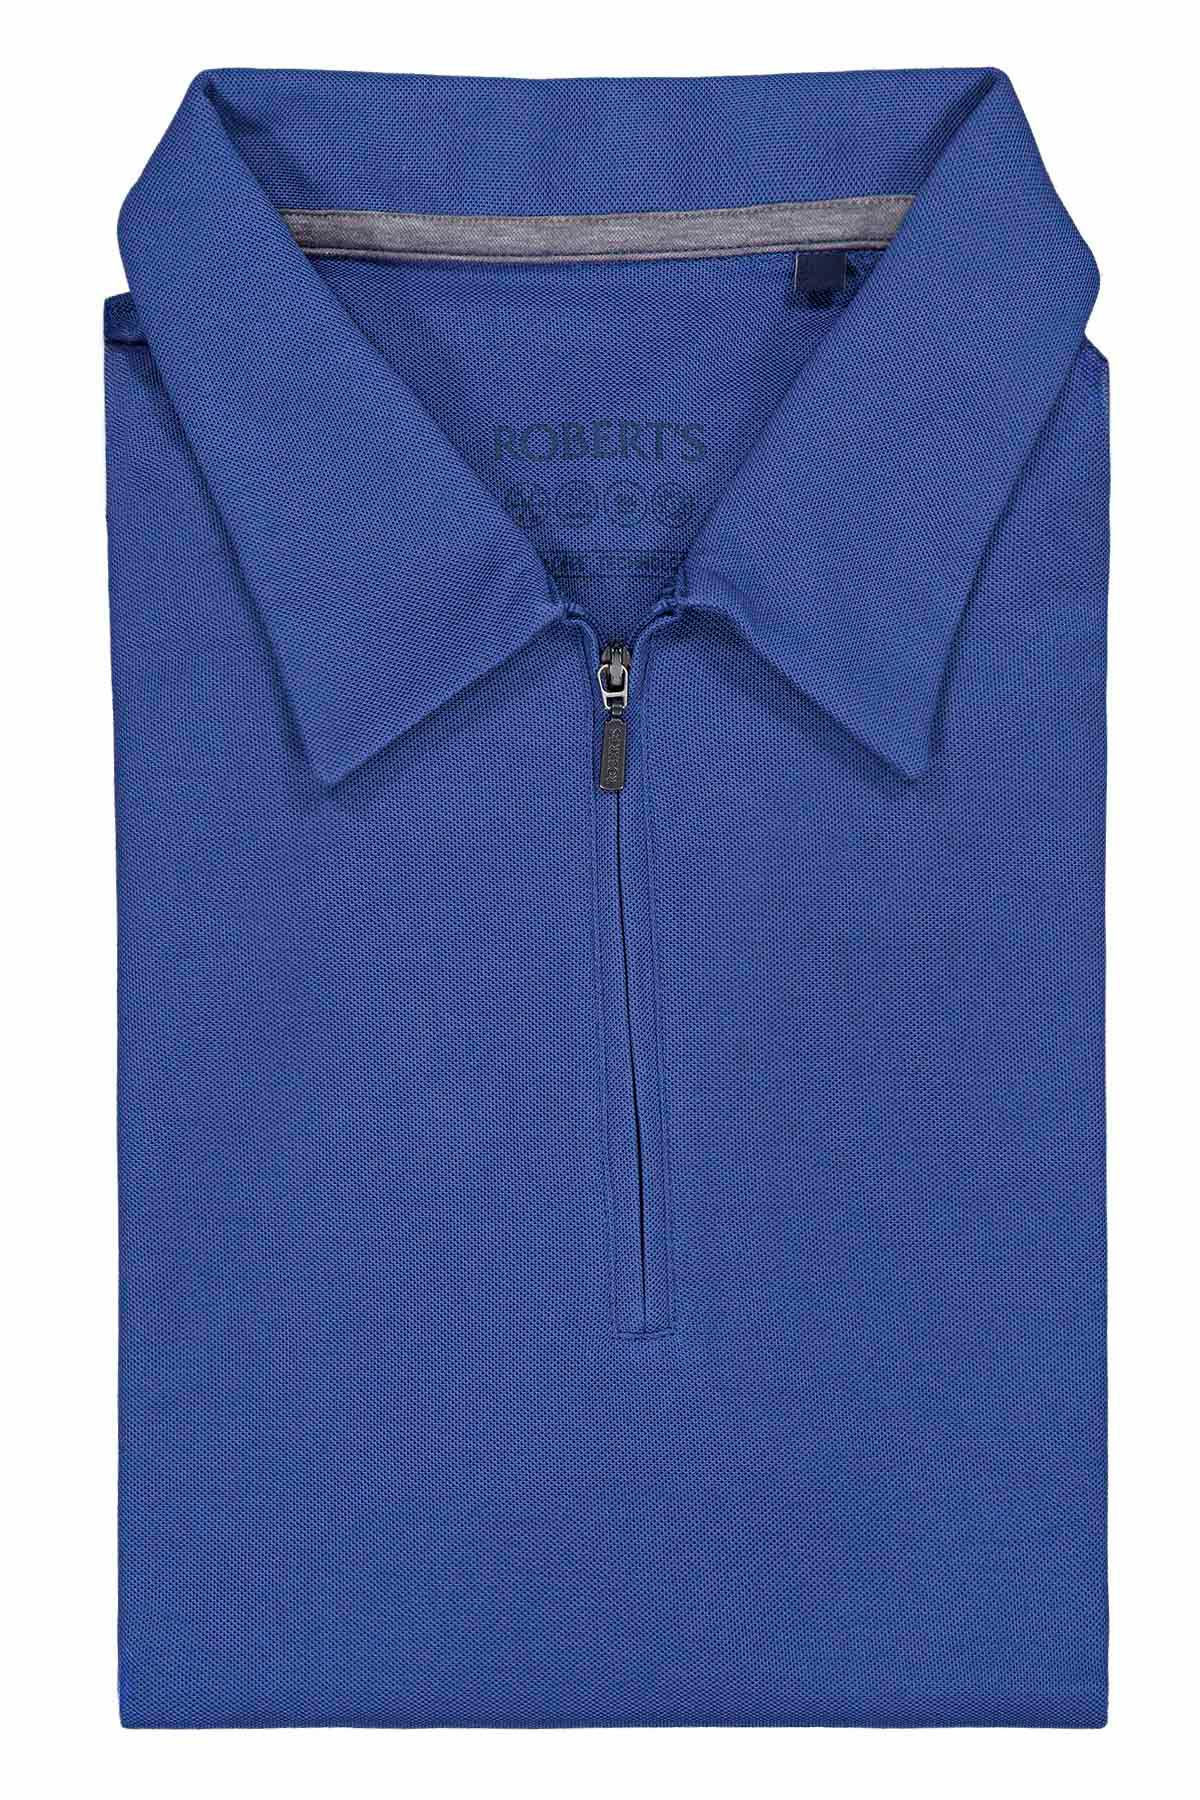 Polo EASY CARE TECHNOLOGY Roberts Color Azul Cobalto Contemporary Fit